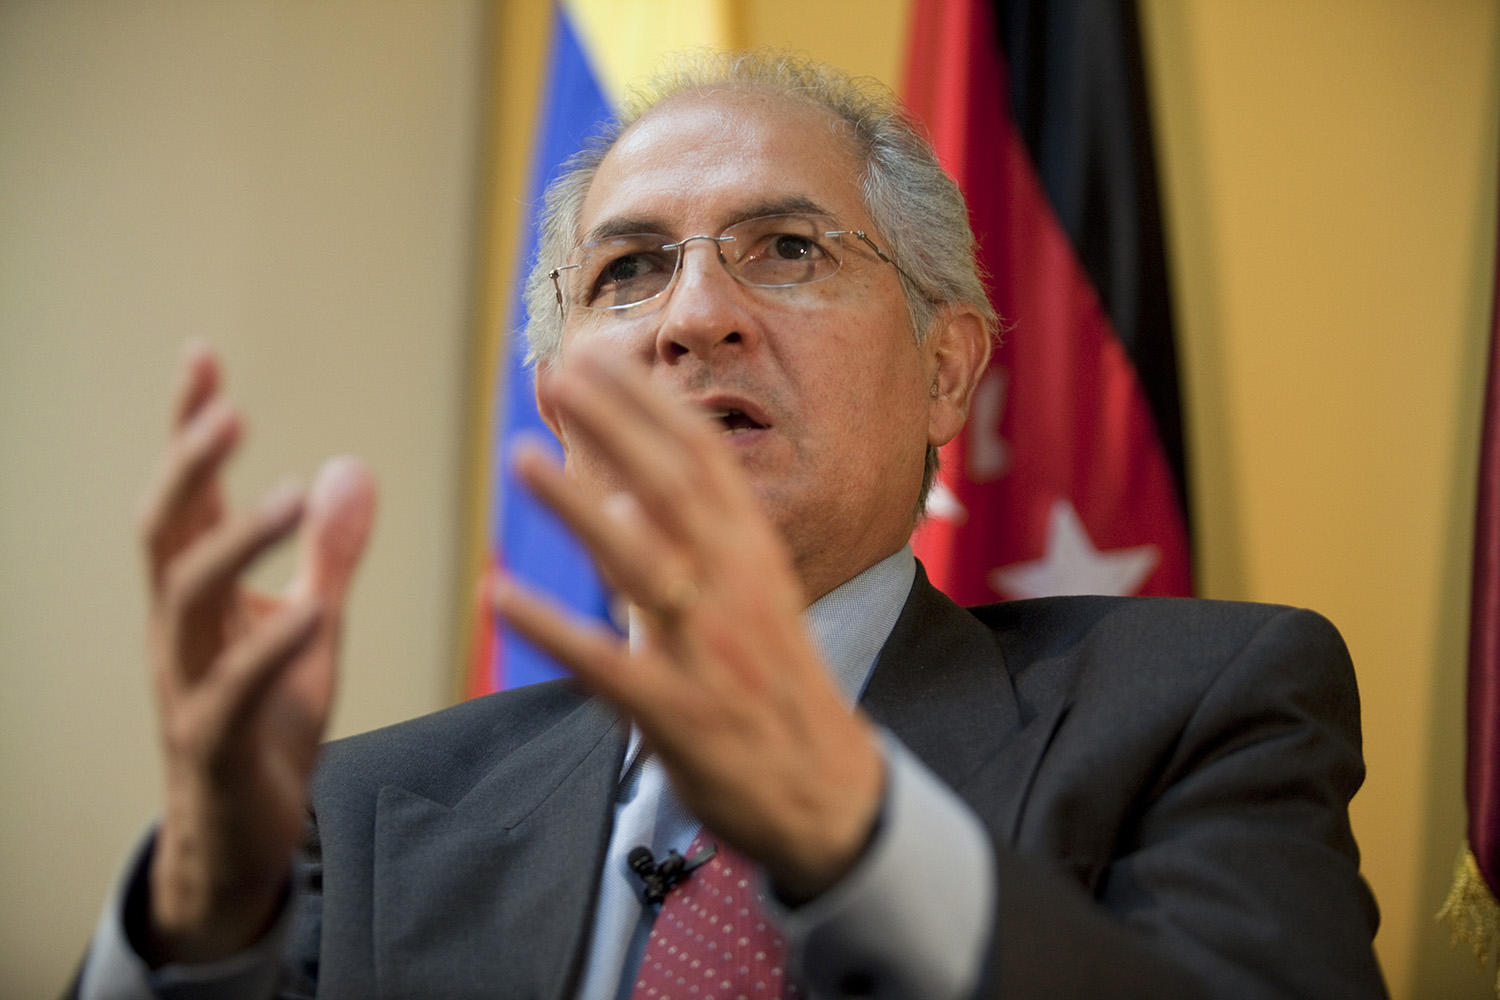 Acusan al alcalde de Caracas de conspiración